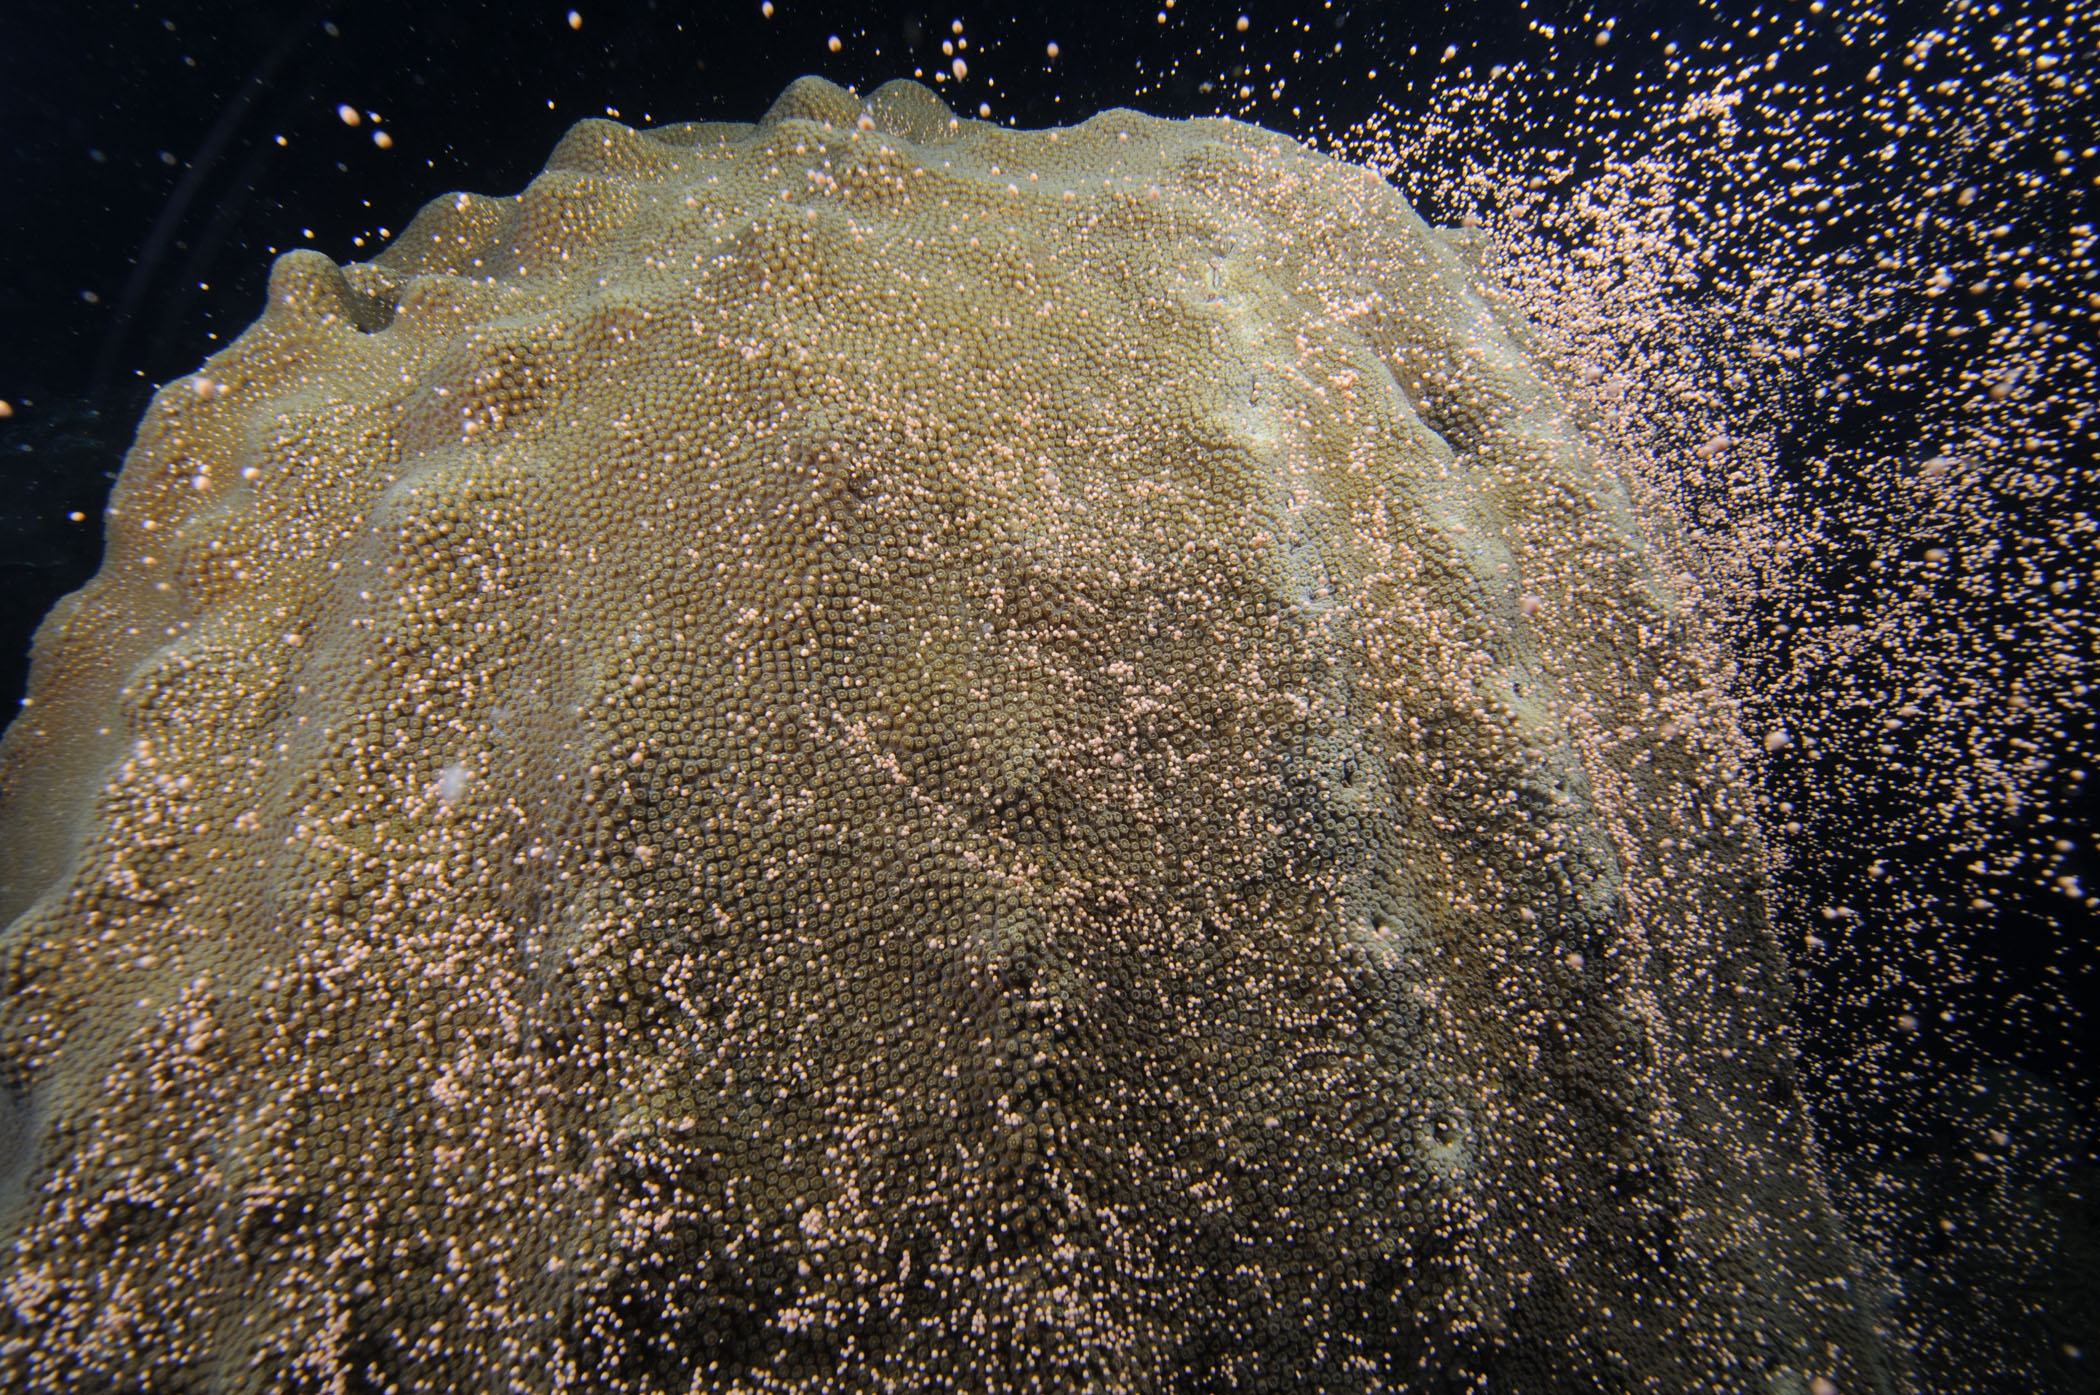 An Orbicella faveolata coral spawning. Credit: Schmahl/FGBNMS